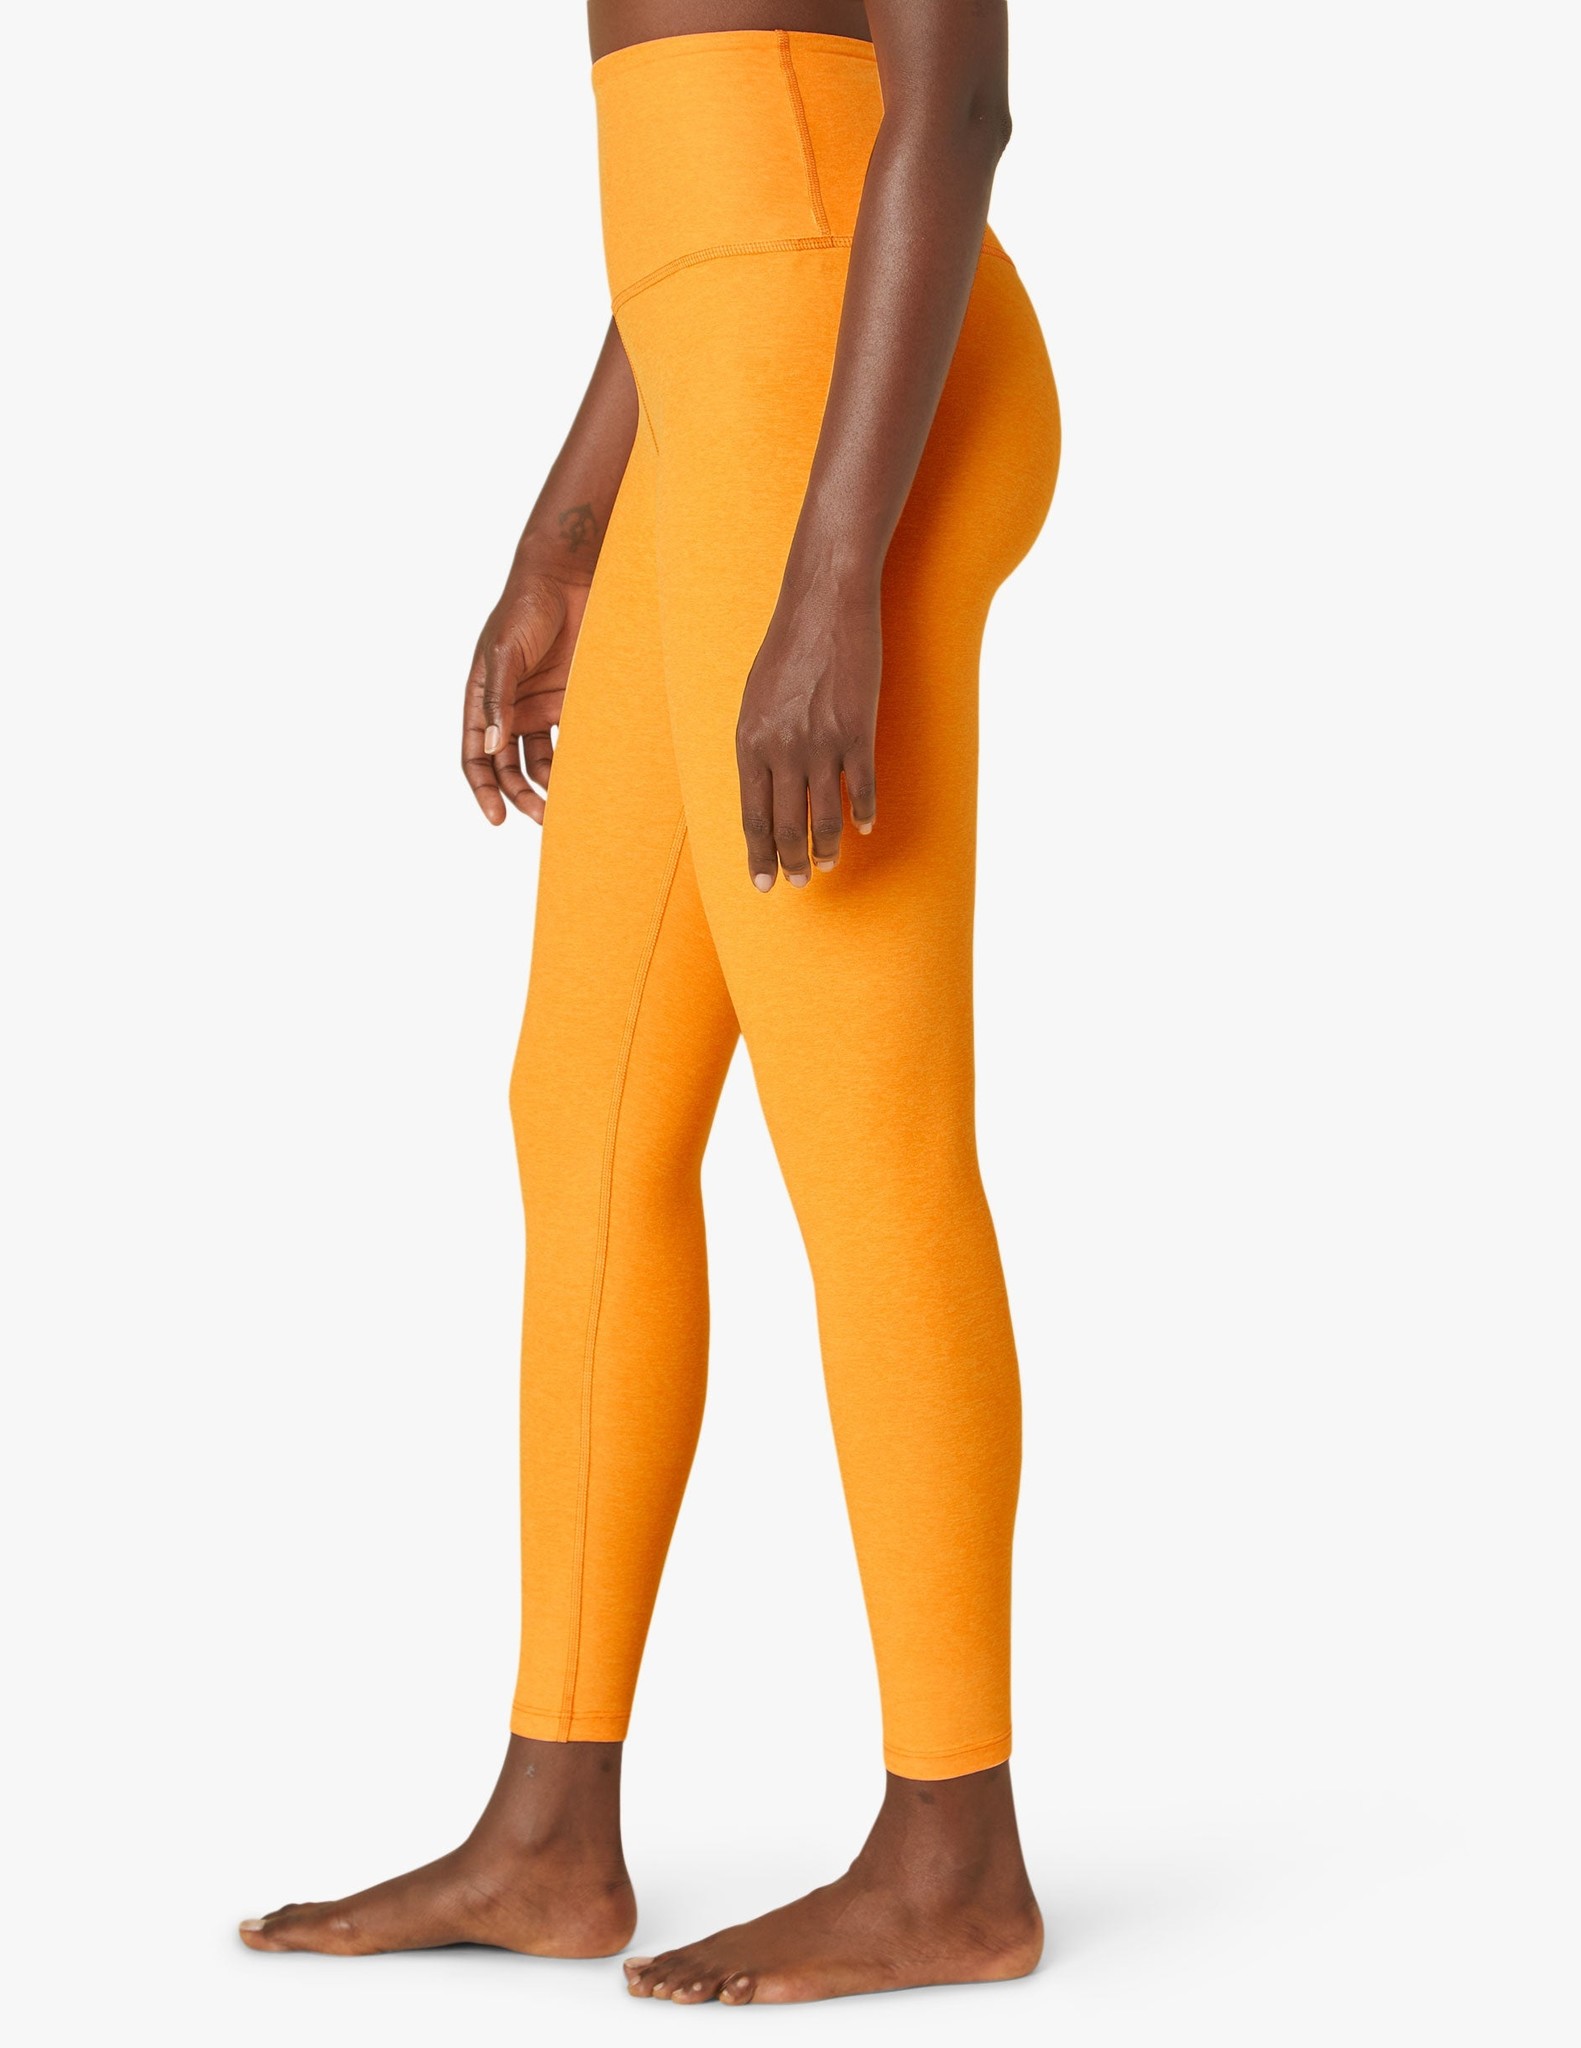 Mustard Yellow Polka Dots Leggings Stylish and Comfortable Leggings for  Women and Kids Full-length or Capri XS-6XL Free Shipping - Etsy